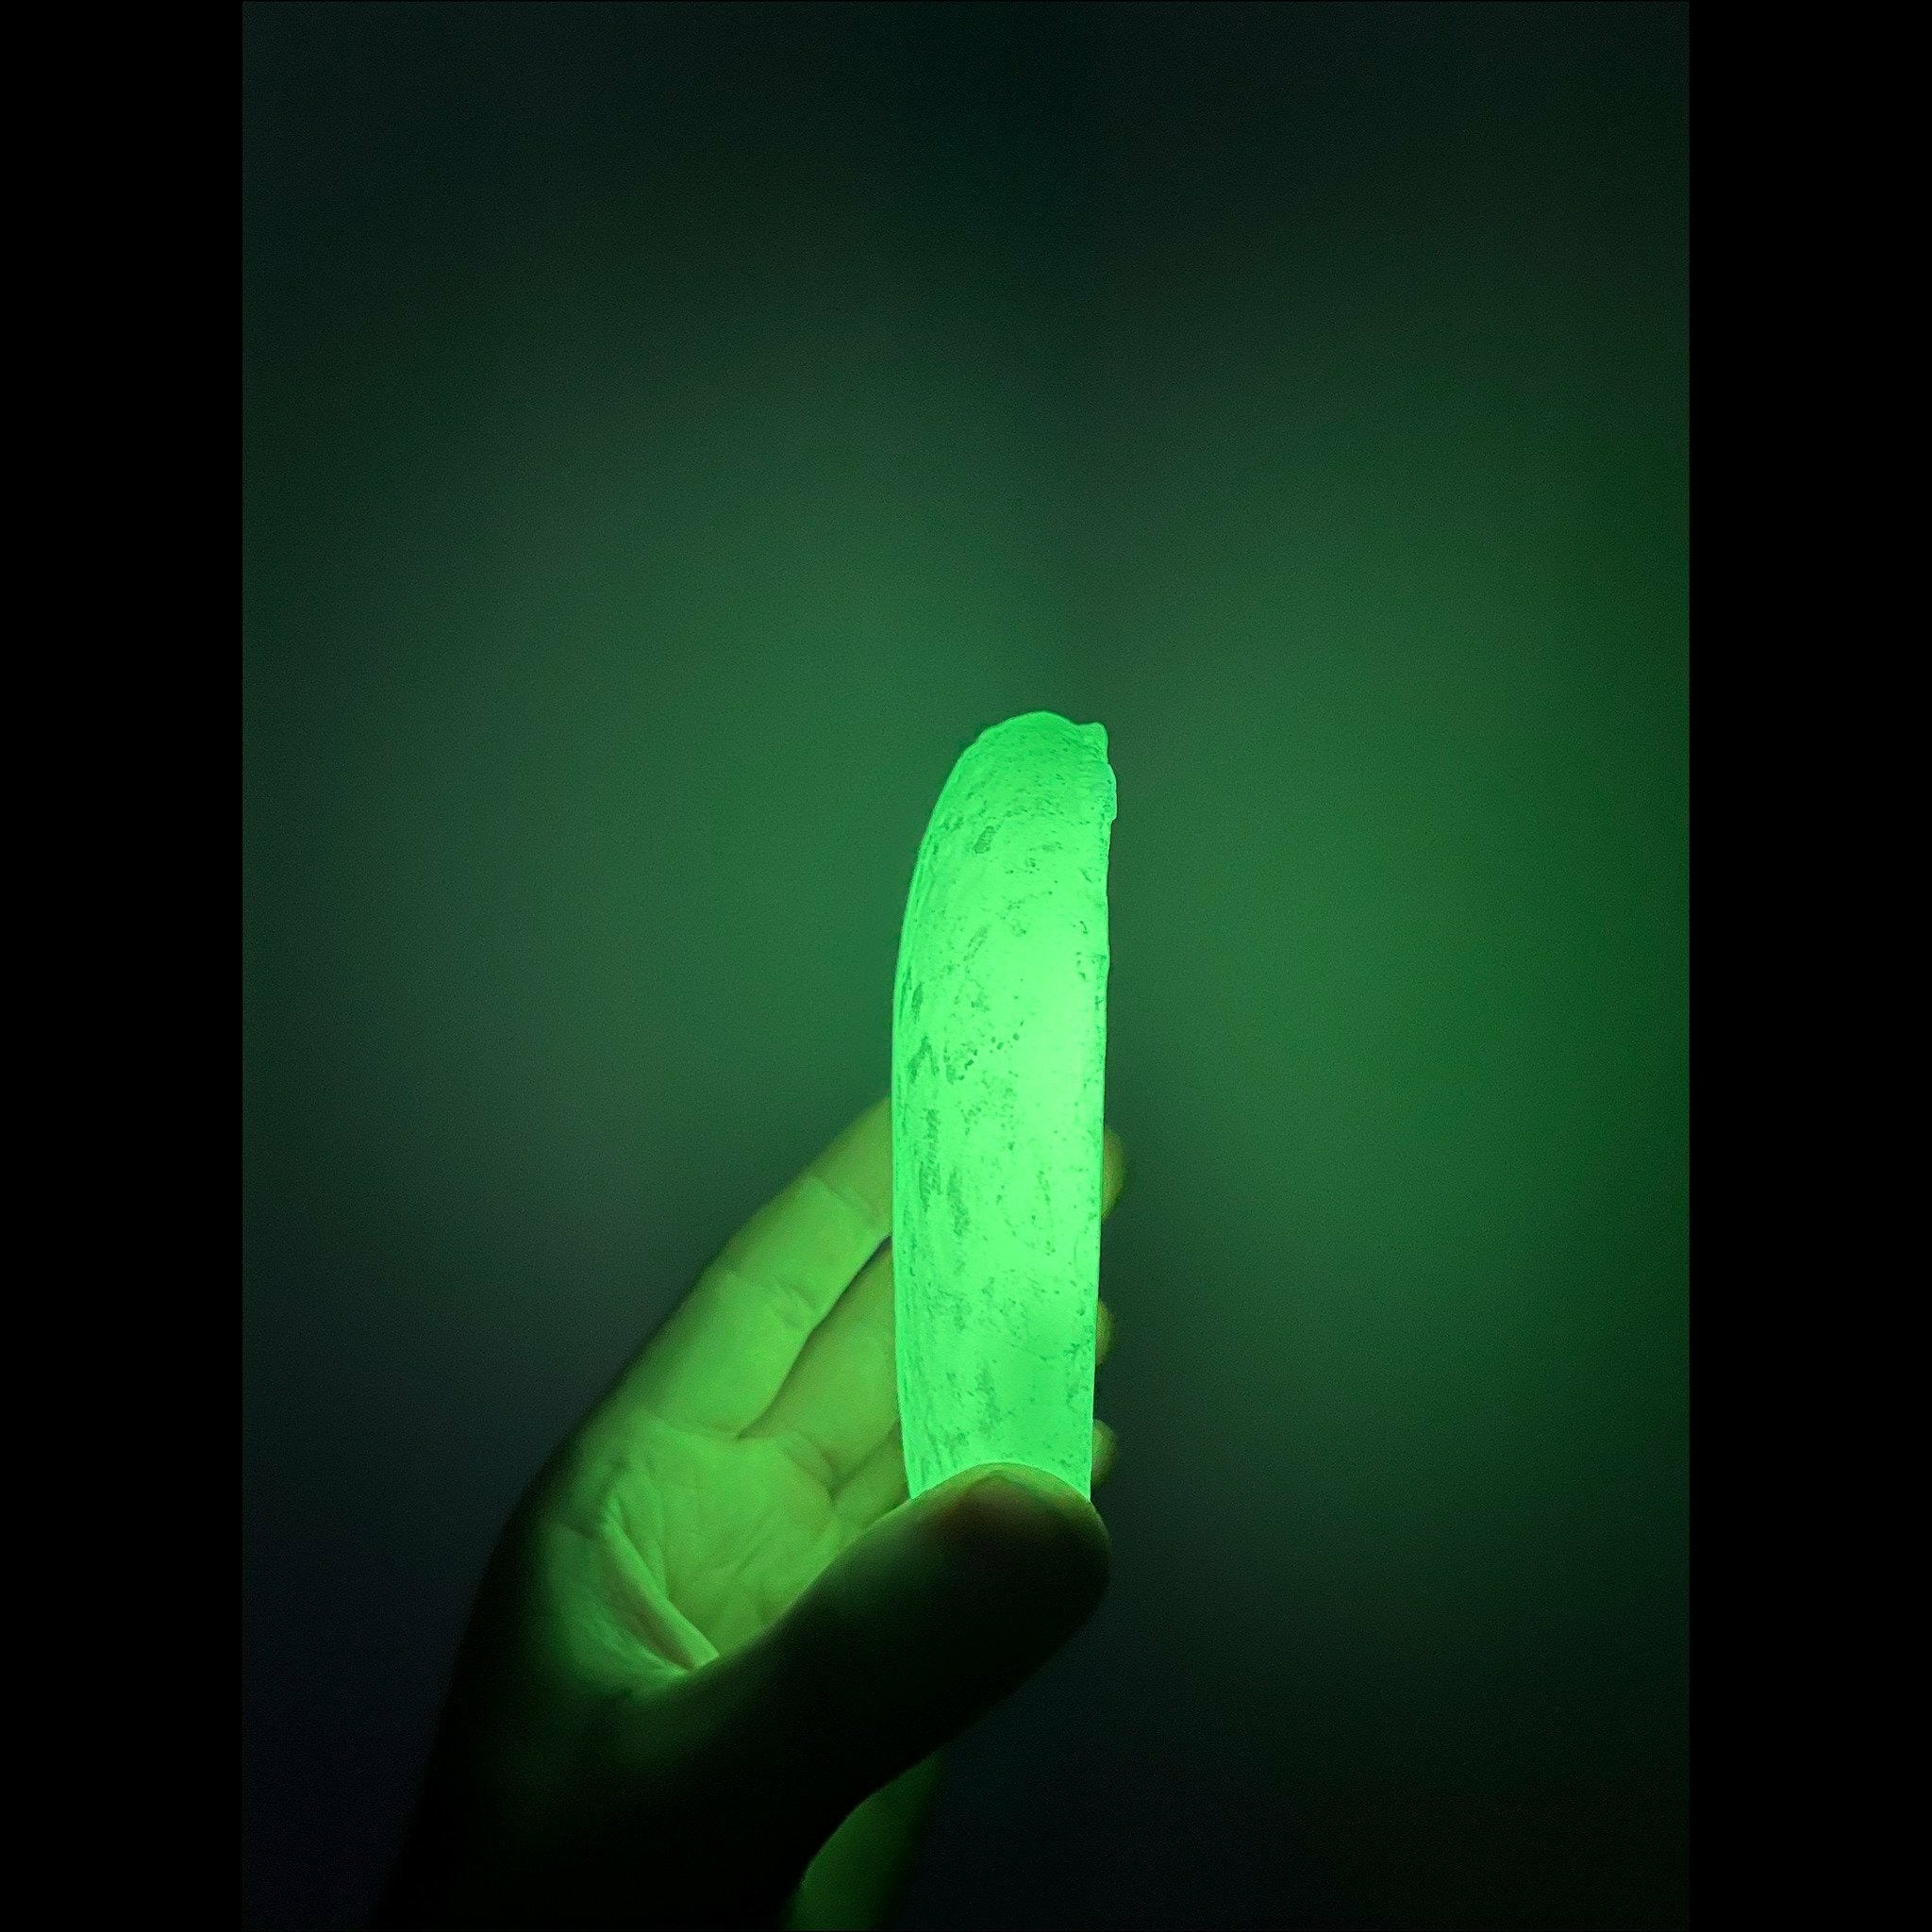 Half Cut Quantum Boulders (3 pack) (100% glow) Final prototype! - Green